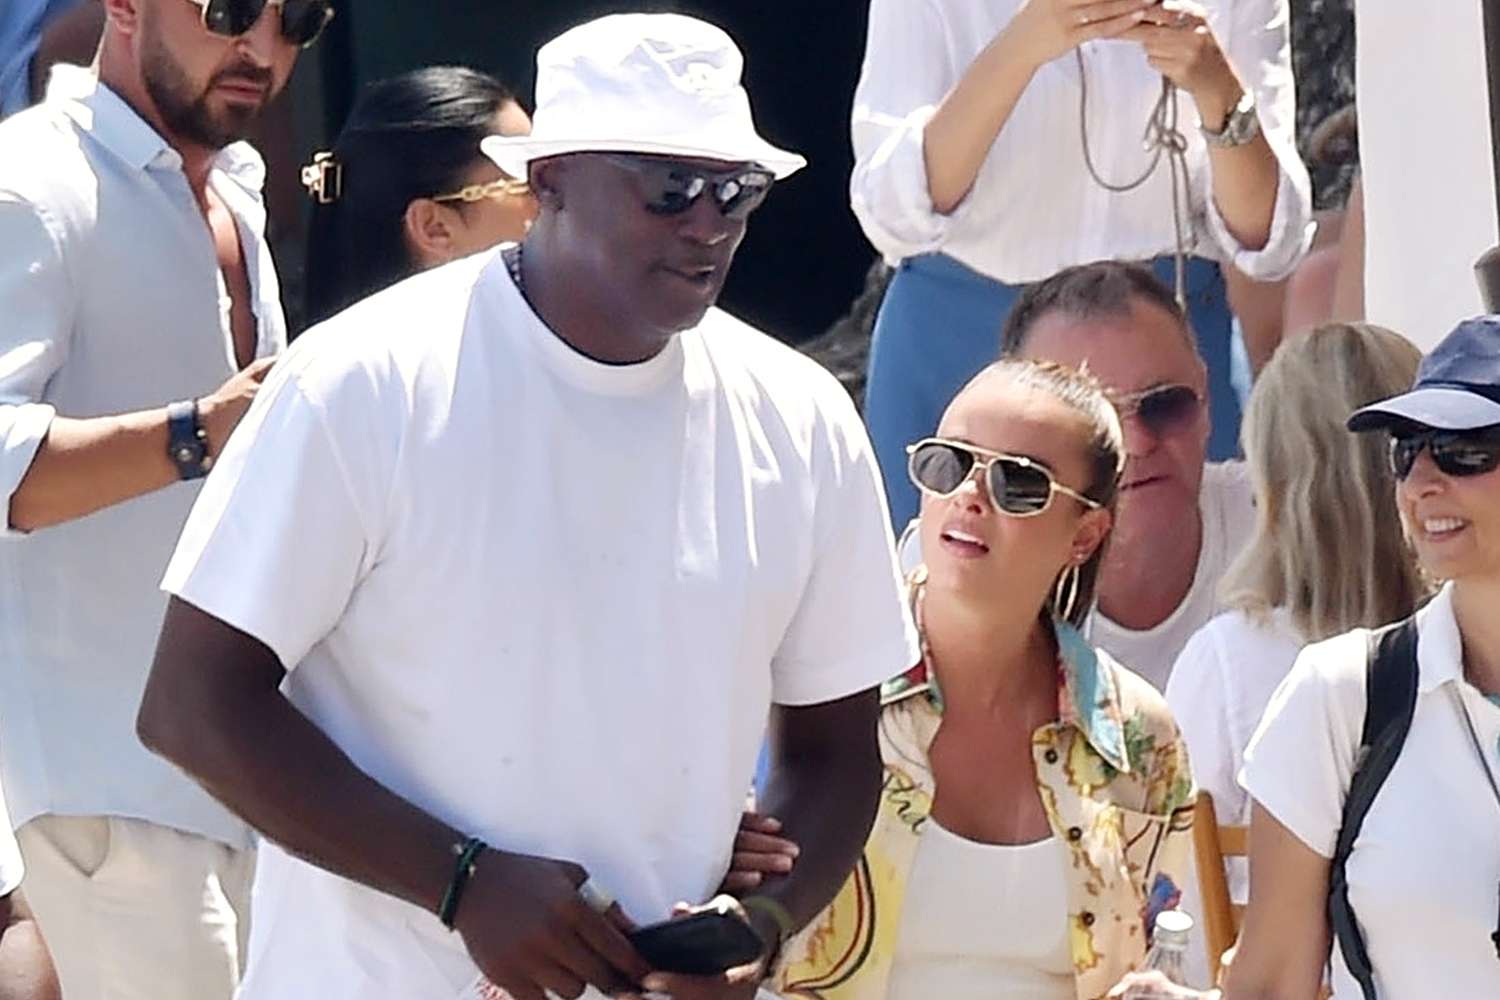 Michael Jordan and Wife Yvette Prieto Stroll Through Portofino Arm-In-Arm on European Vacation